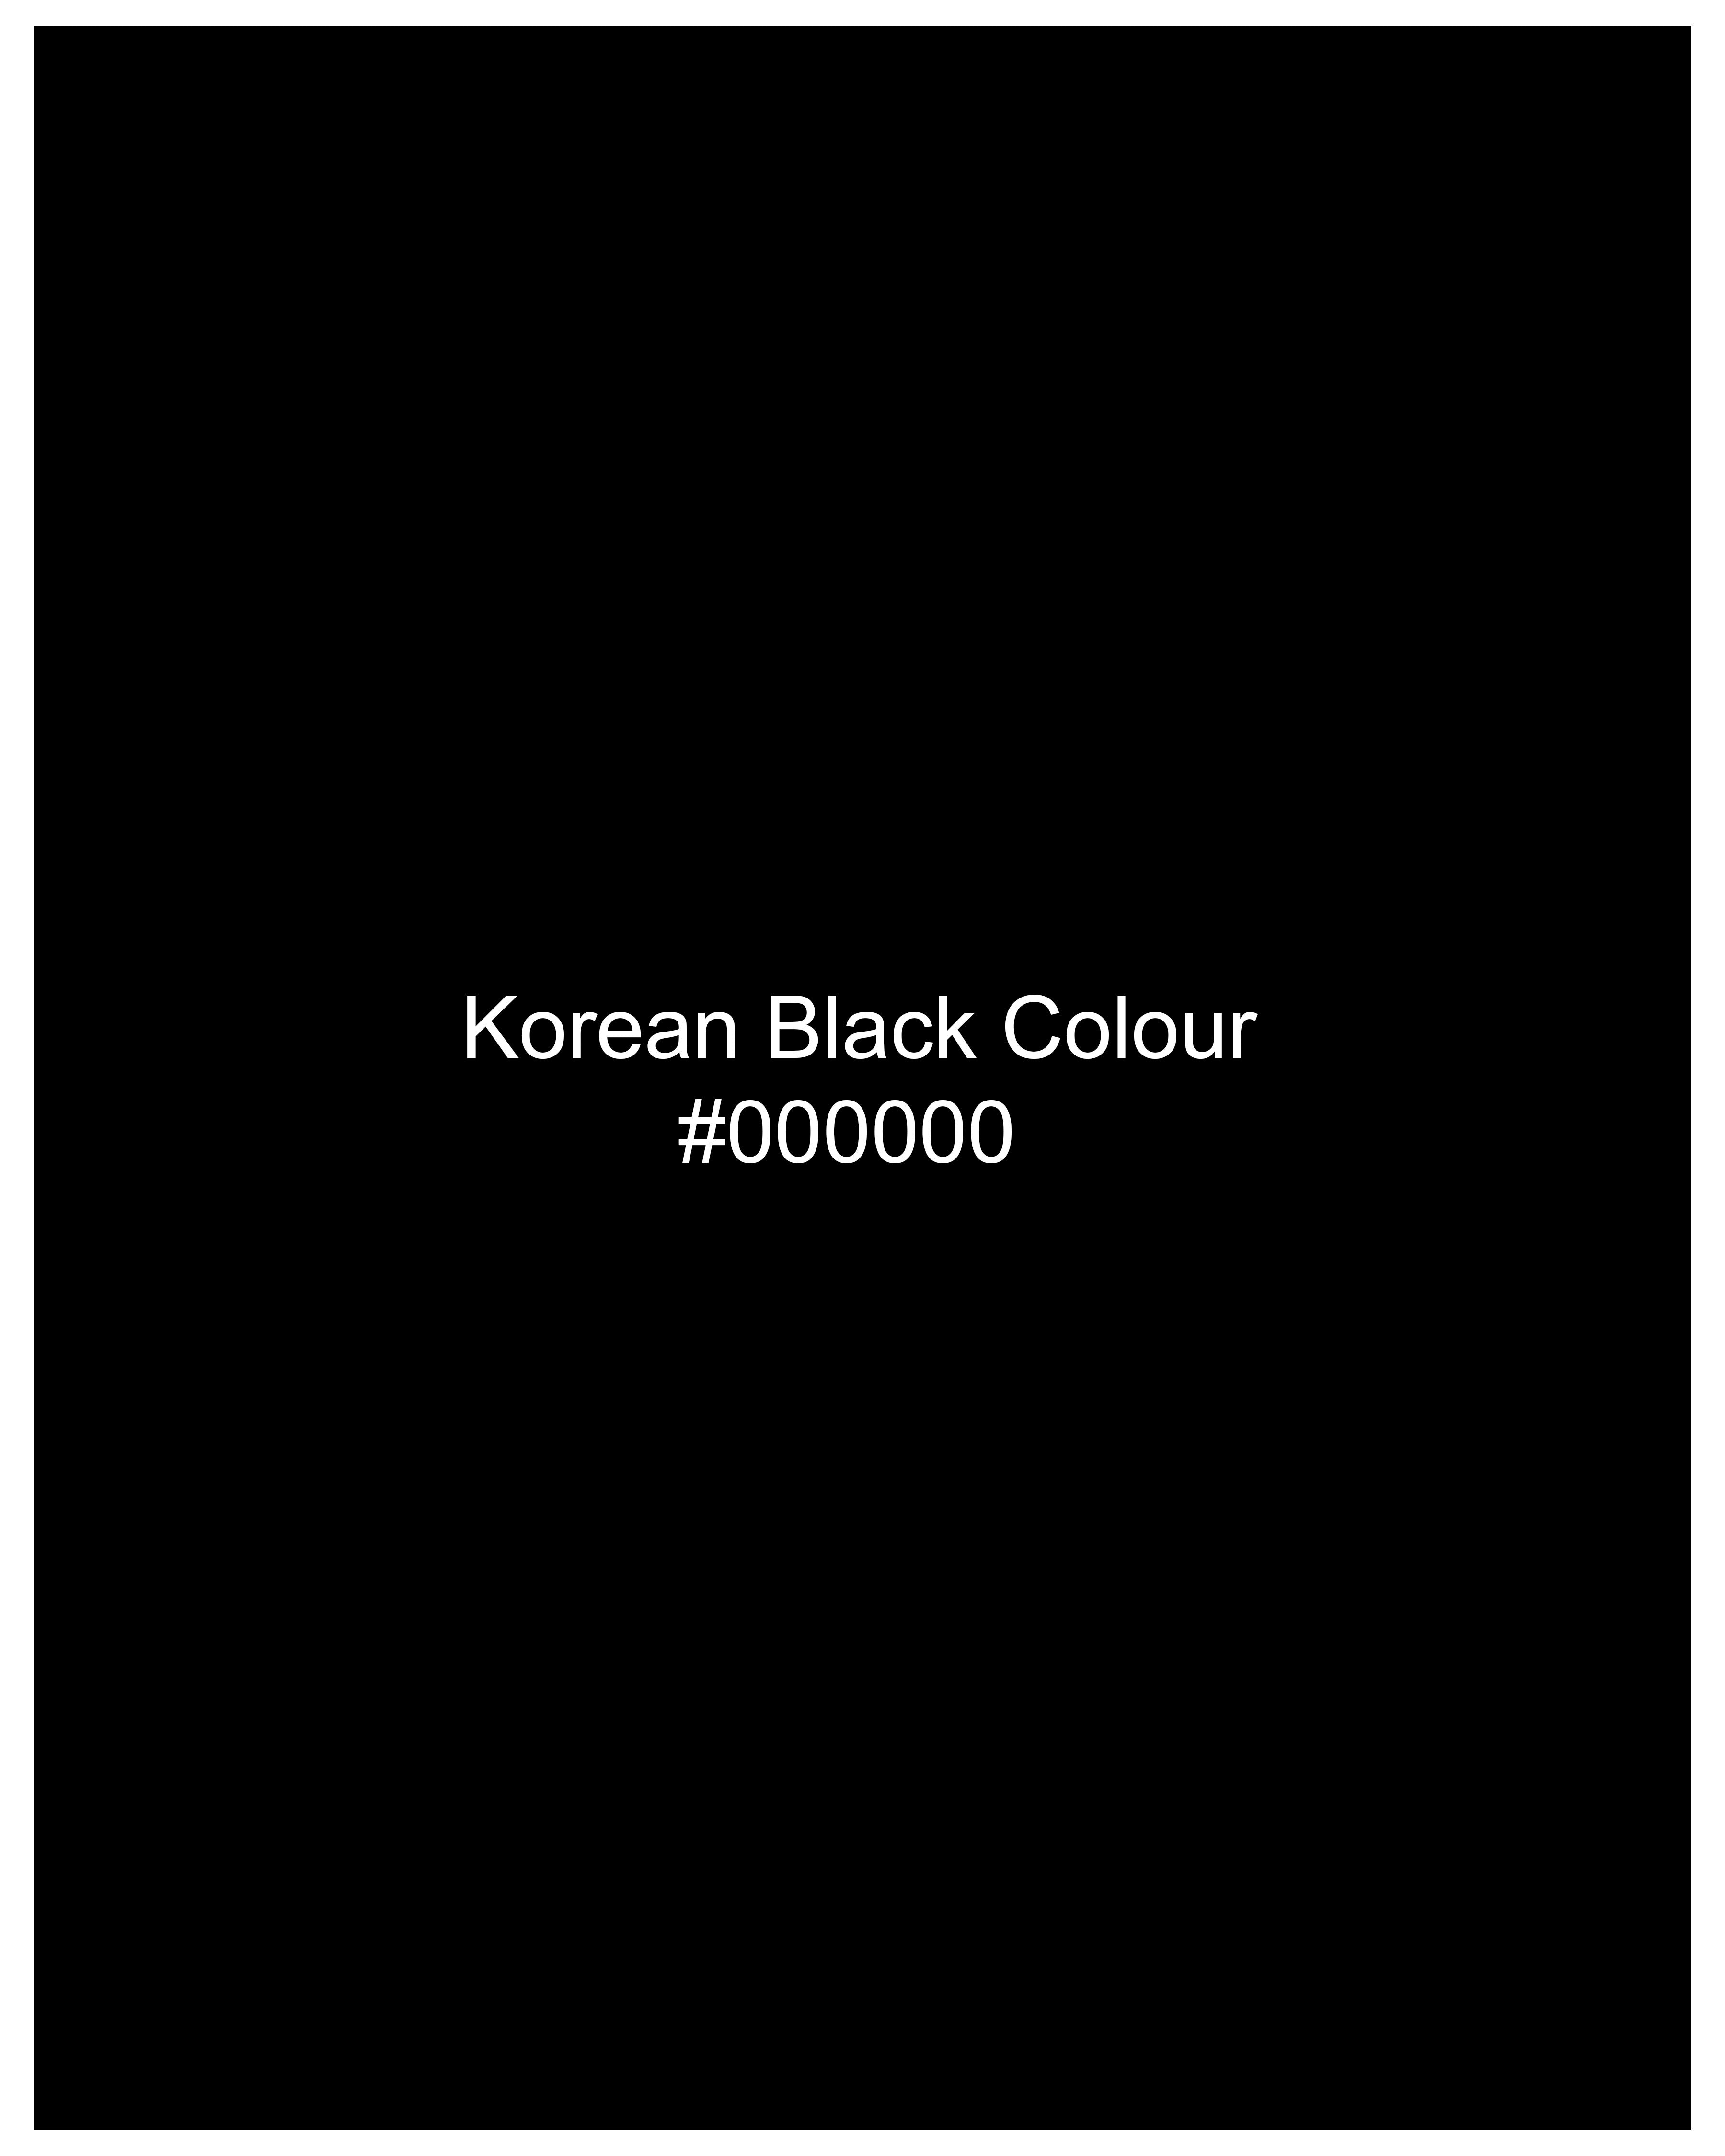 Korean Black (The Best Black We Have) Bandhgala Blazer